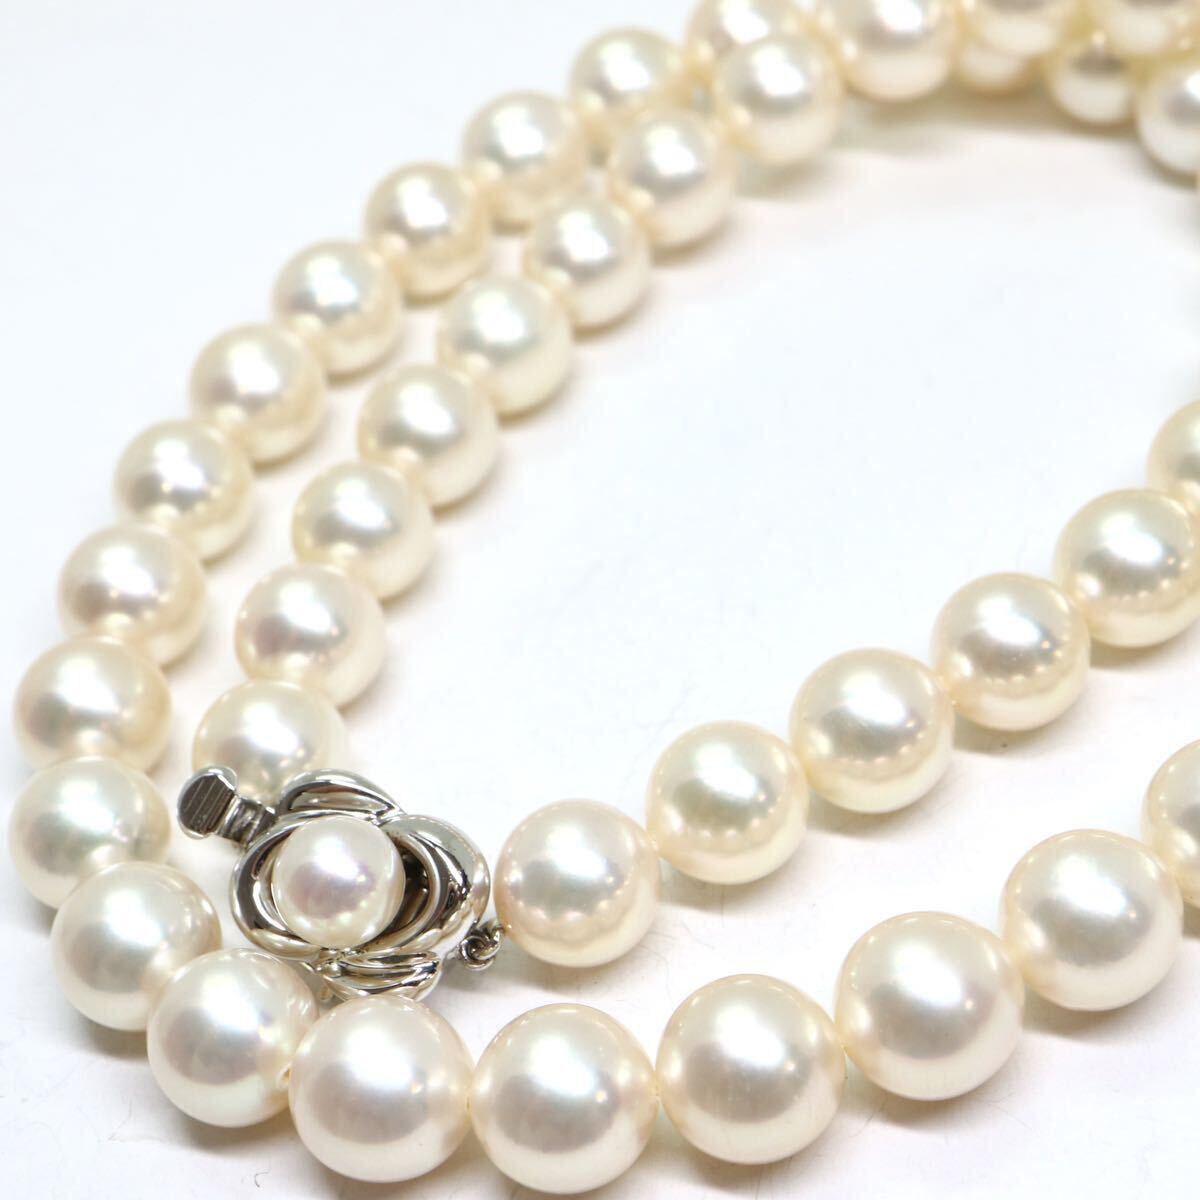 TASAKI(田崎真珠)《アコヤ本真珠ネックレス》A 約8.0-8.5mm珠 42.1g 約42cm pearl necklace ジュエリー jewelry ED0/ED0の画像1